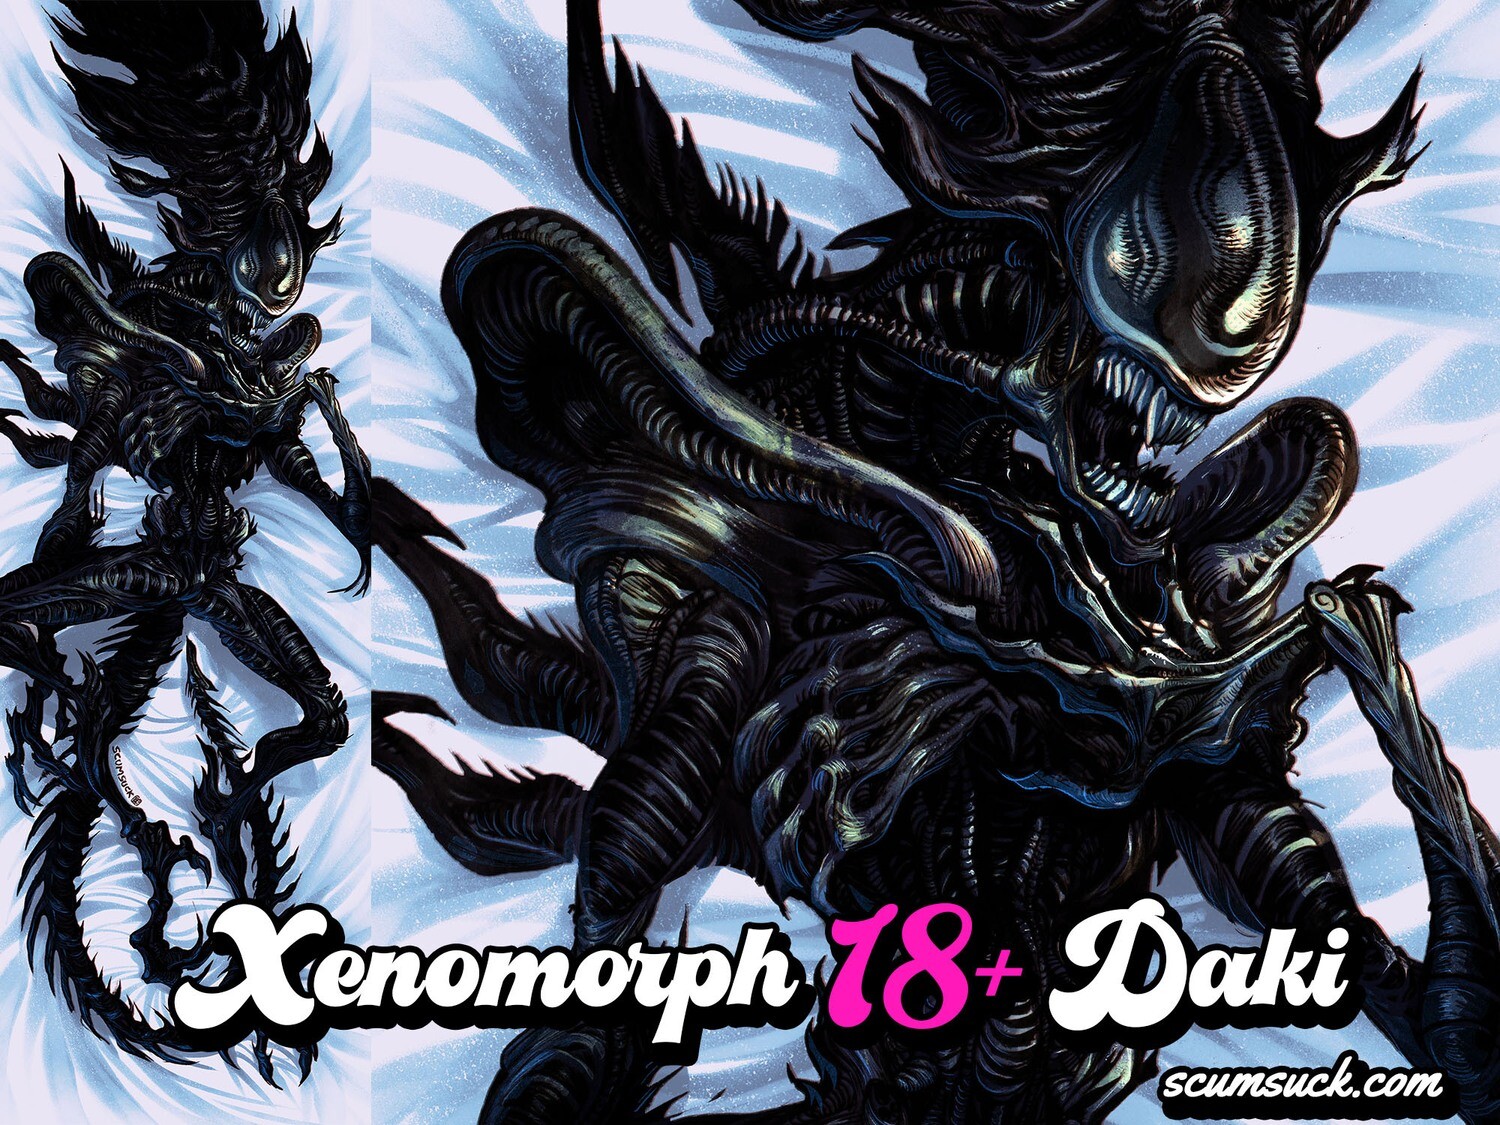 Xenomorph 18+ Dakimakura Pillow Case